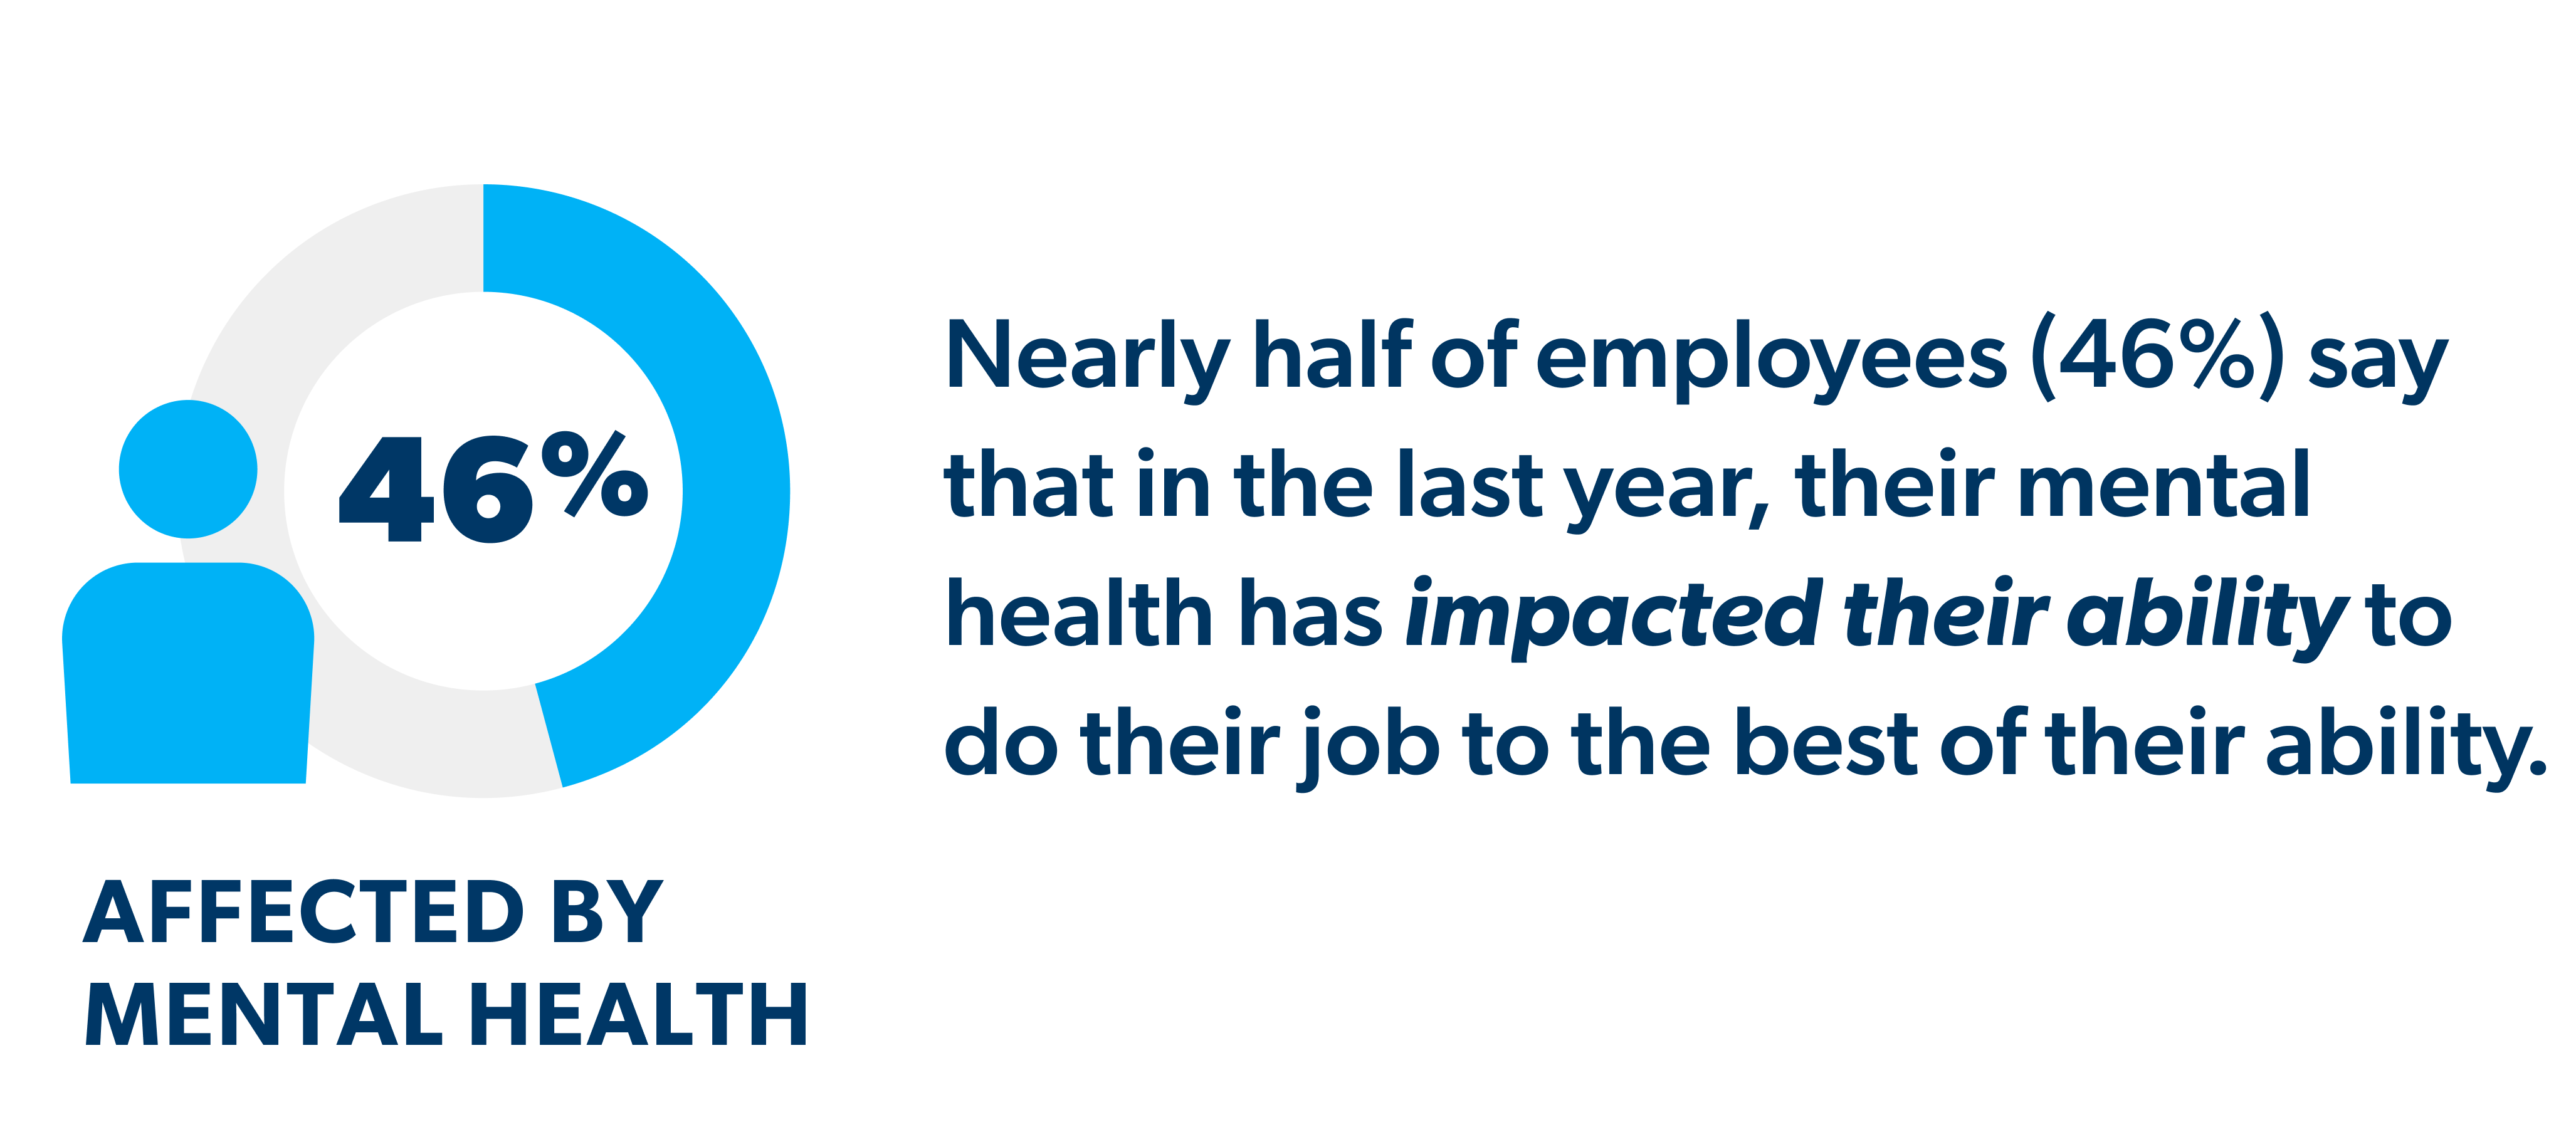 Employees’ Mental Health Is Impacting Their Work   